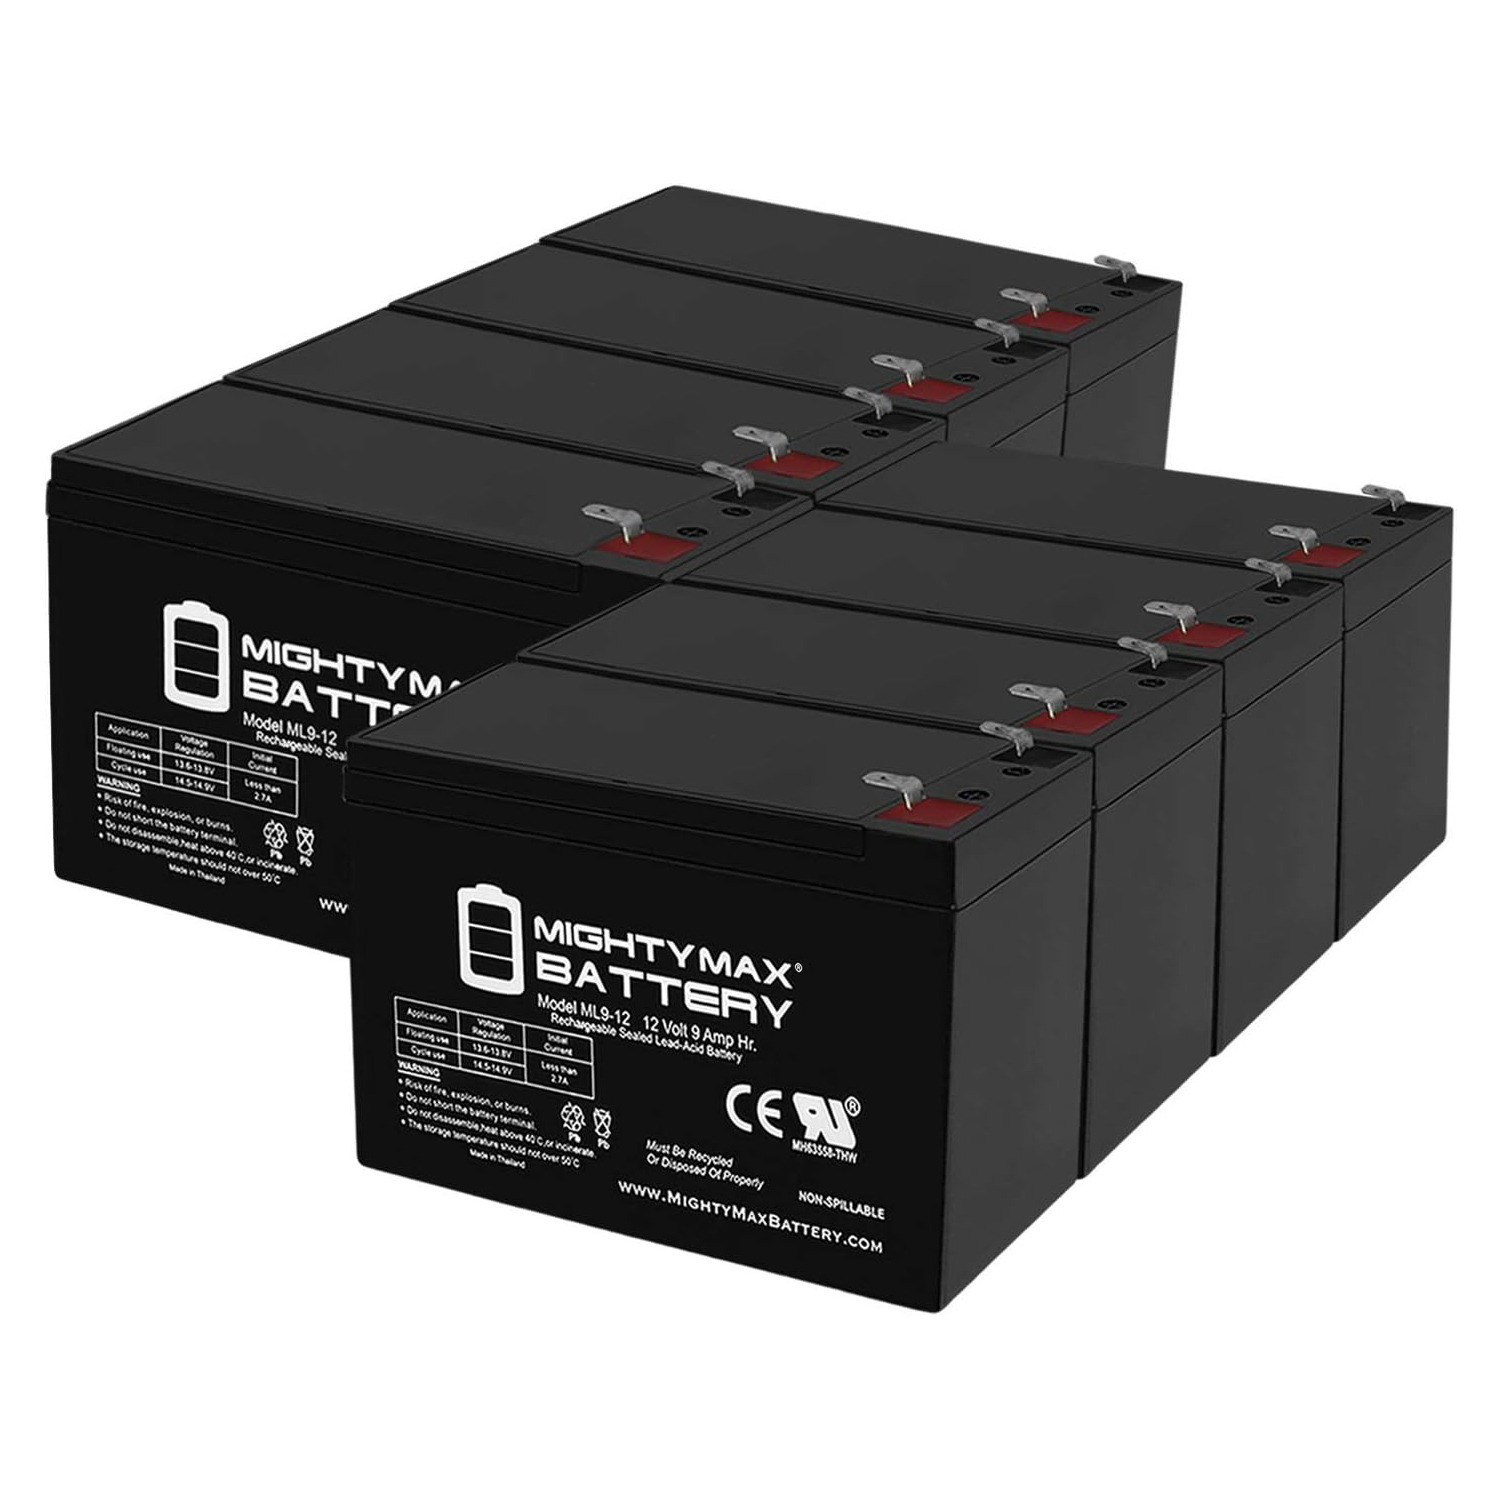 Altronix SMP312C 12V, 9Ah Lead Acid Battery - 8 Pack